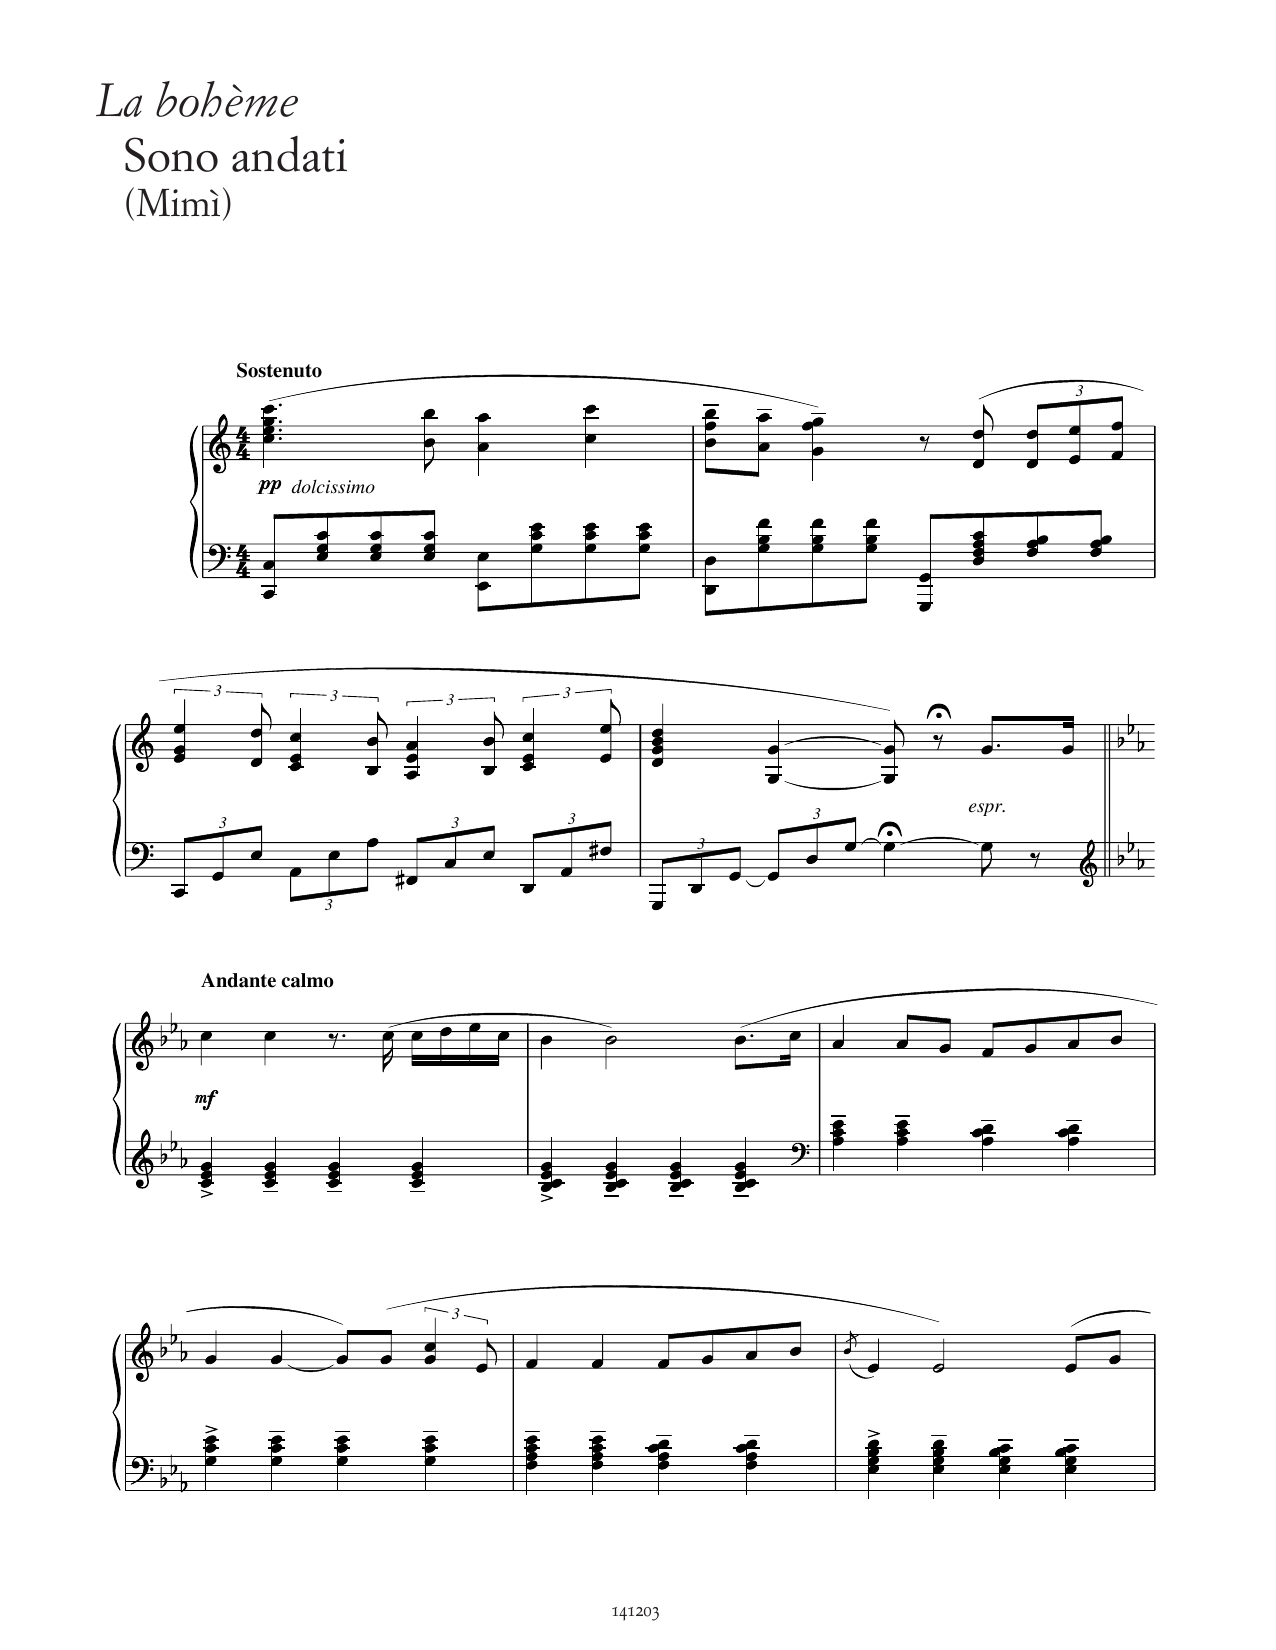 Giacomo Puccini Sono andati? (from La Bohème) Sheet Music Notes & Chords for Piano Solo - Download or Print PDF